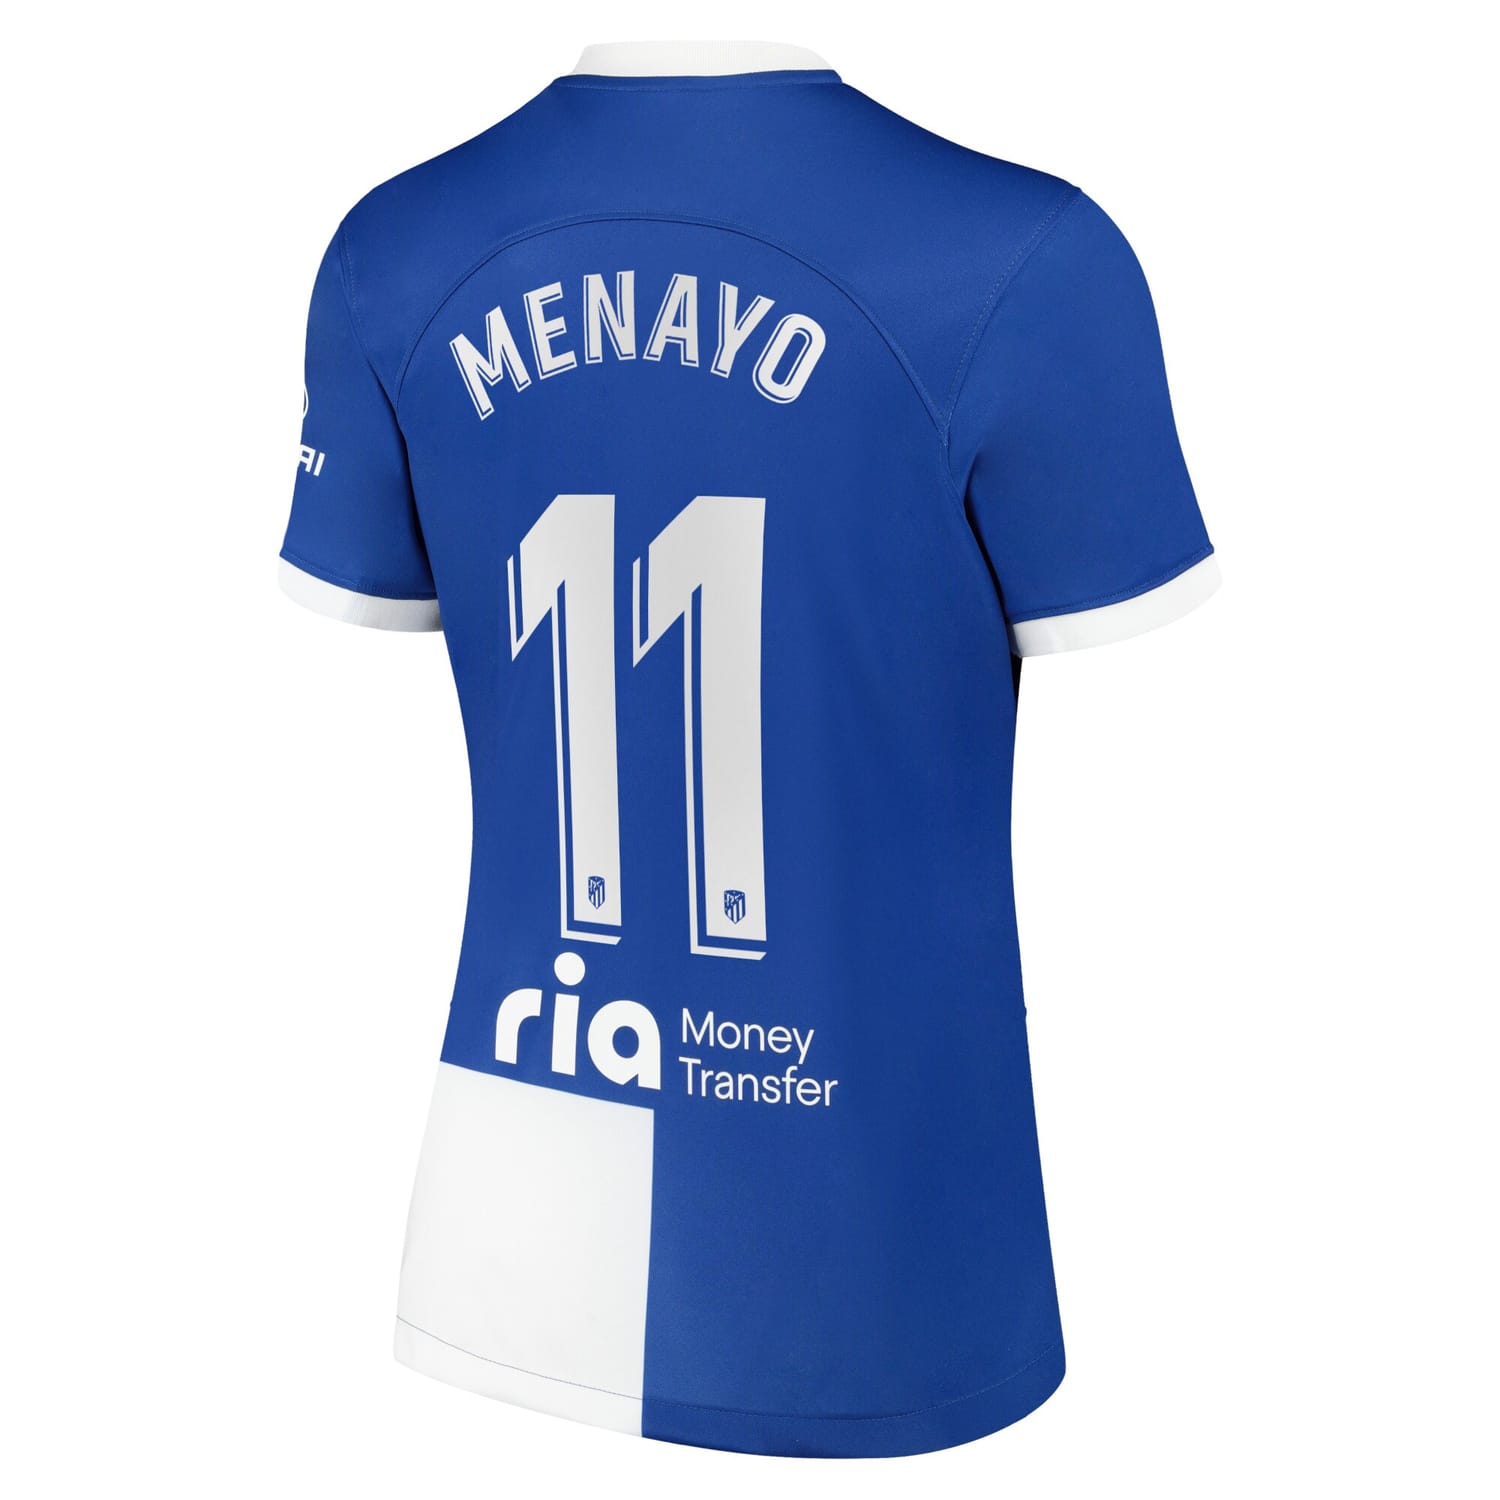 La Liga Atletico de Madrid Jersey Shirt 2022-23 player Carmen Menayo 11 printing for Women